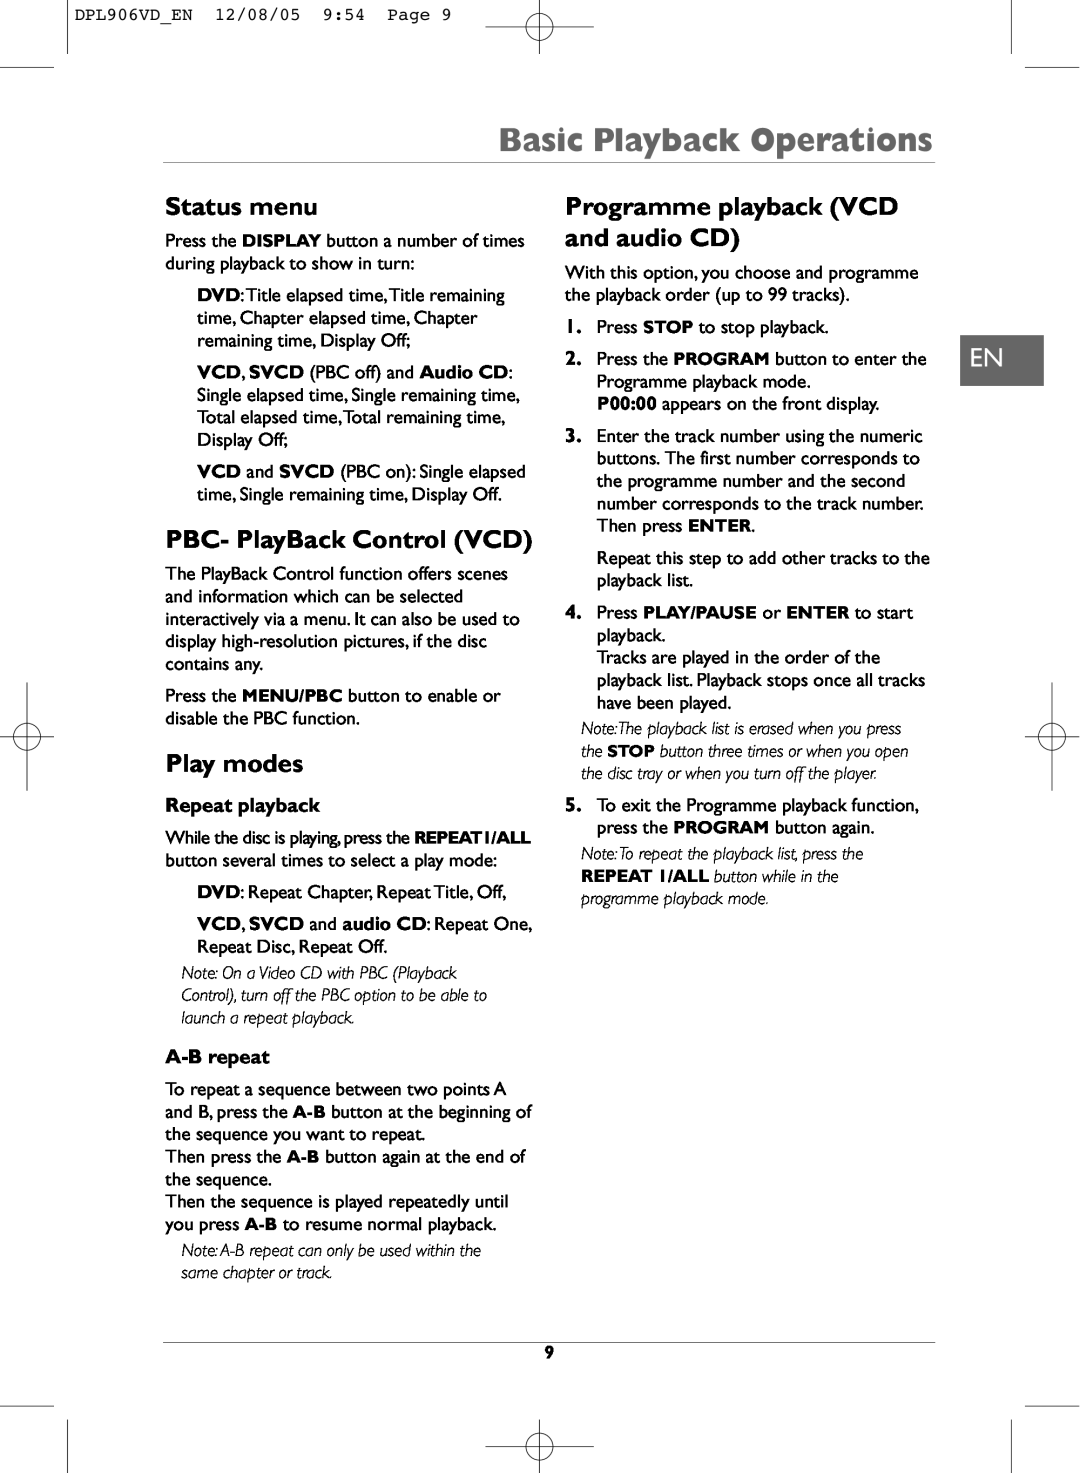 Technicolor - Thomson DPL906VD_EN manual Basic Playback Operations, Status menu, PBC- PlayBack Control VCD, Play modes 